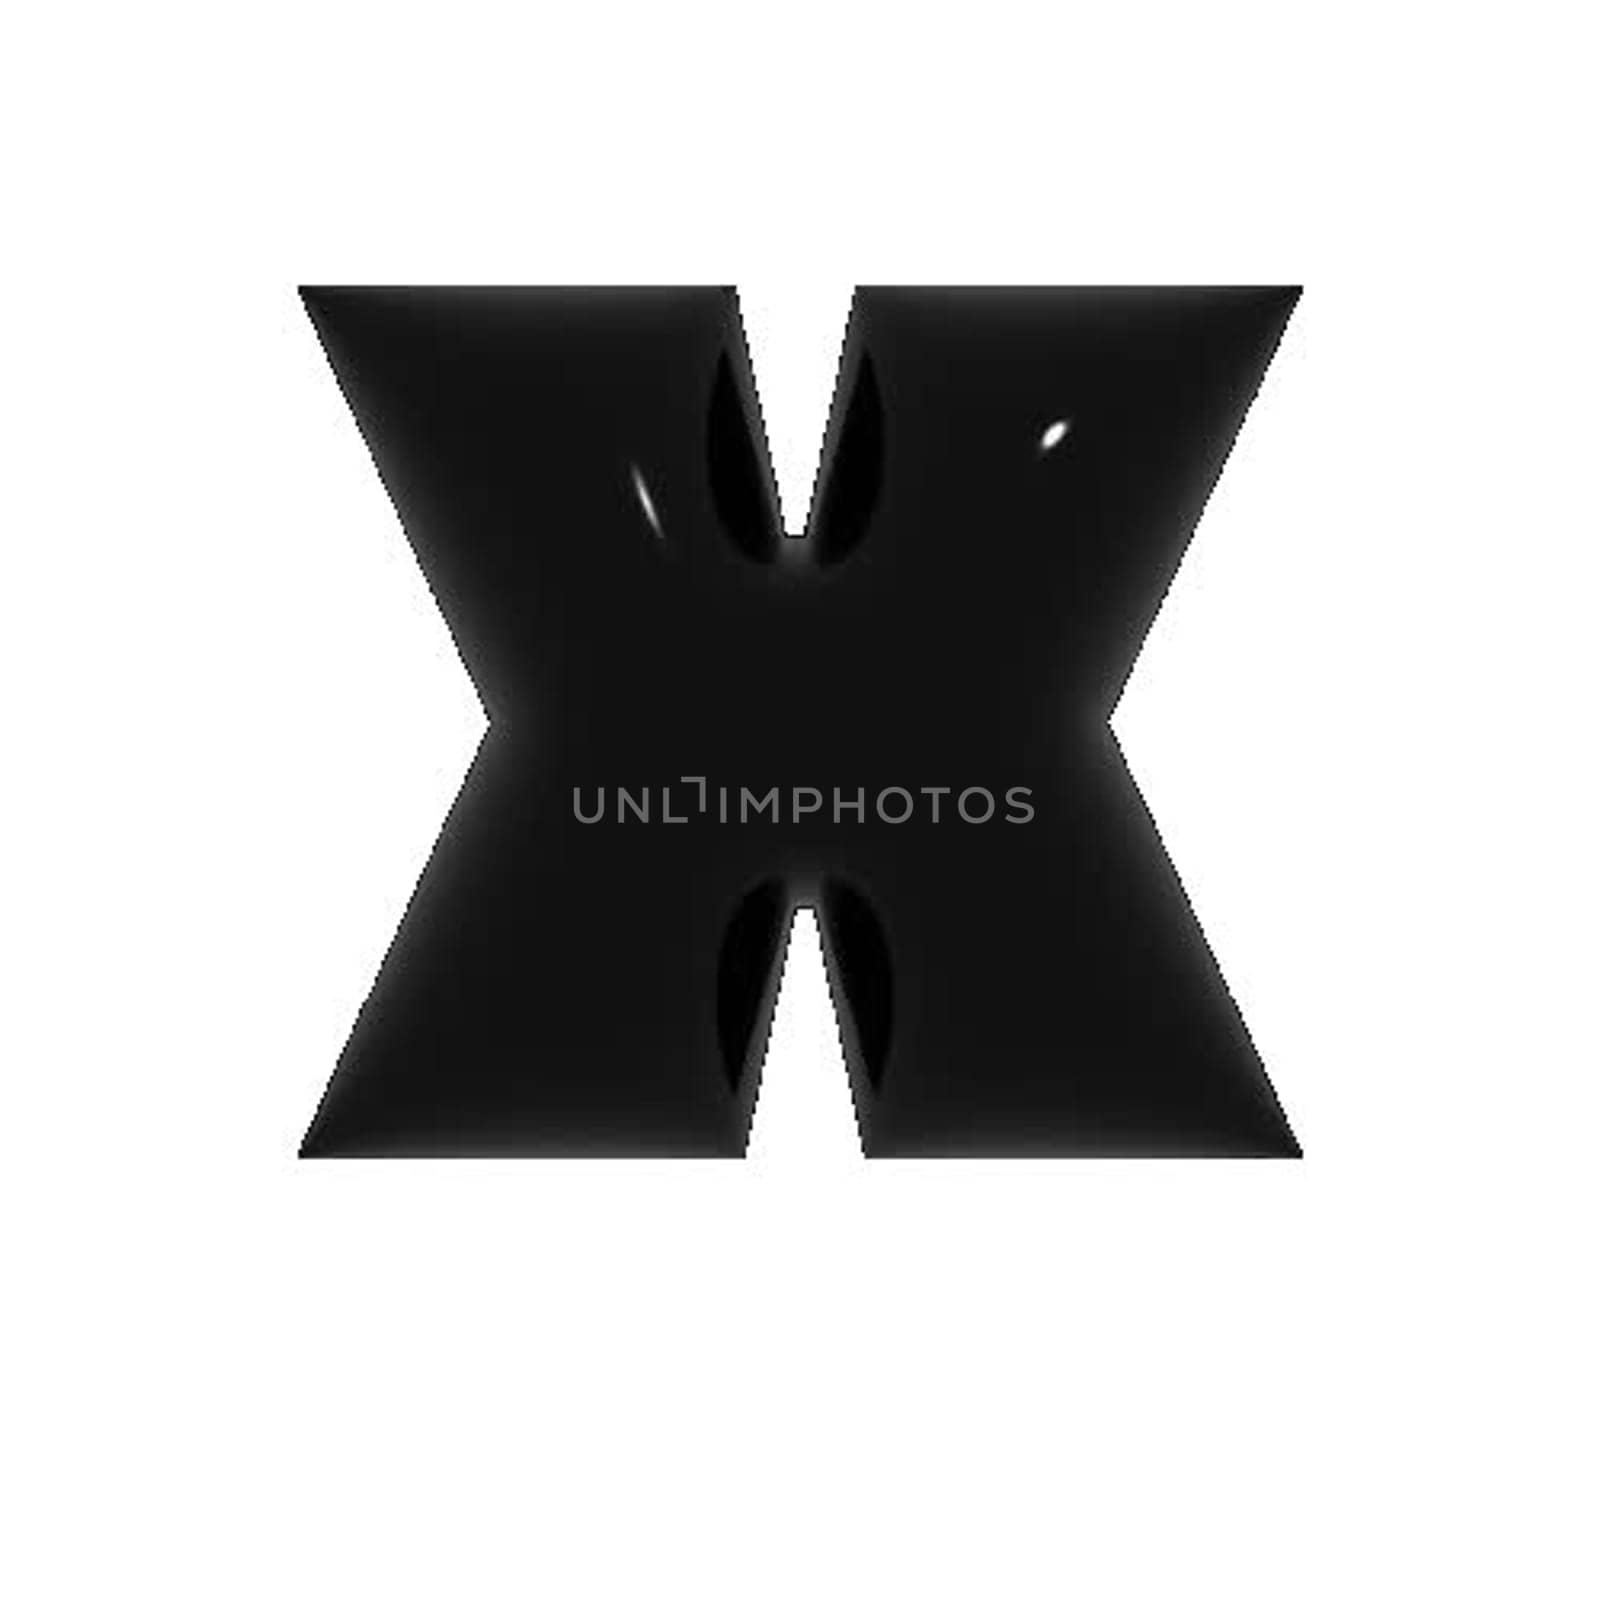 Black metal shiny reflective letter X 3D illustration by Dustick